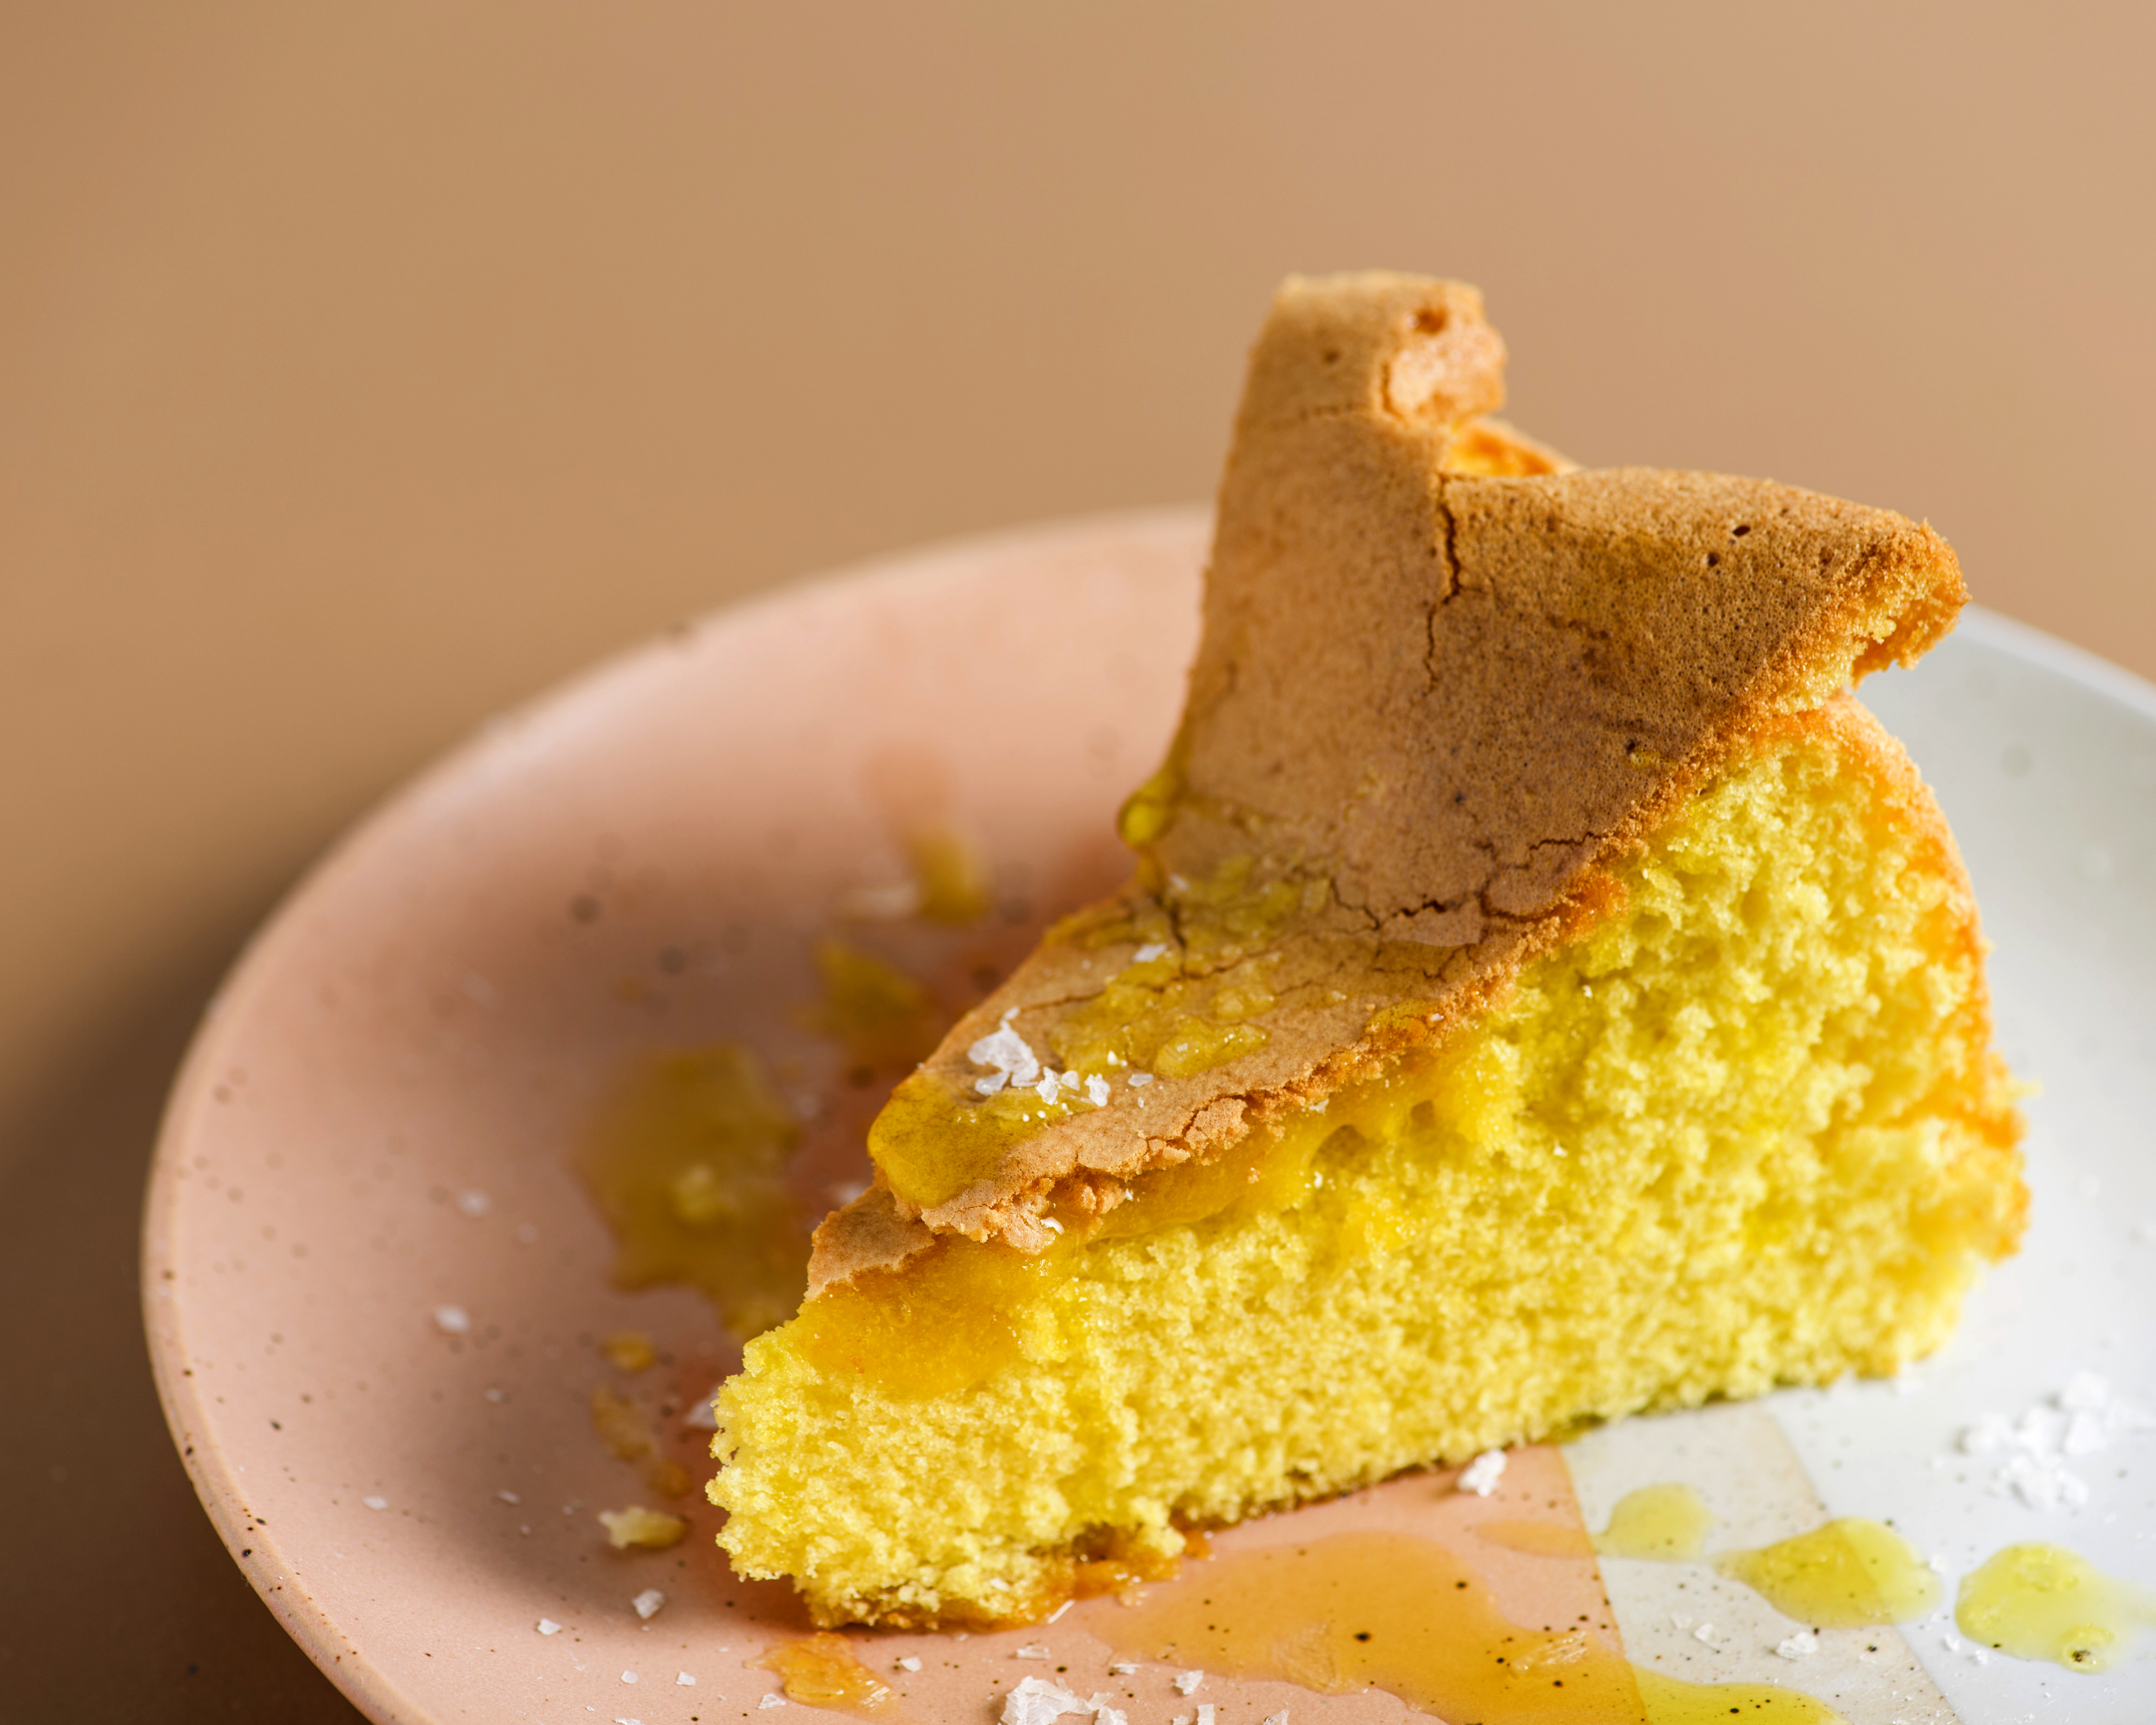 Fluffy Sponge Cake Recipe - The Home Cook's Kitchen